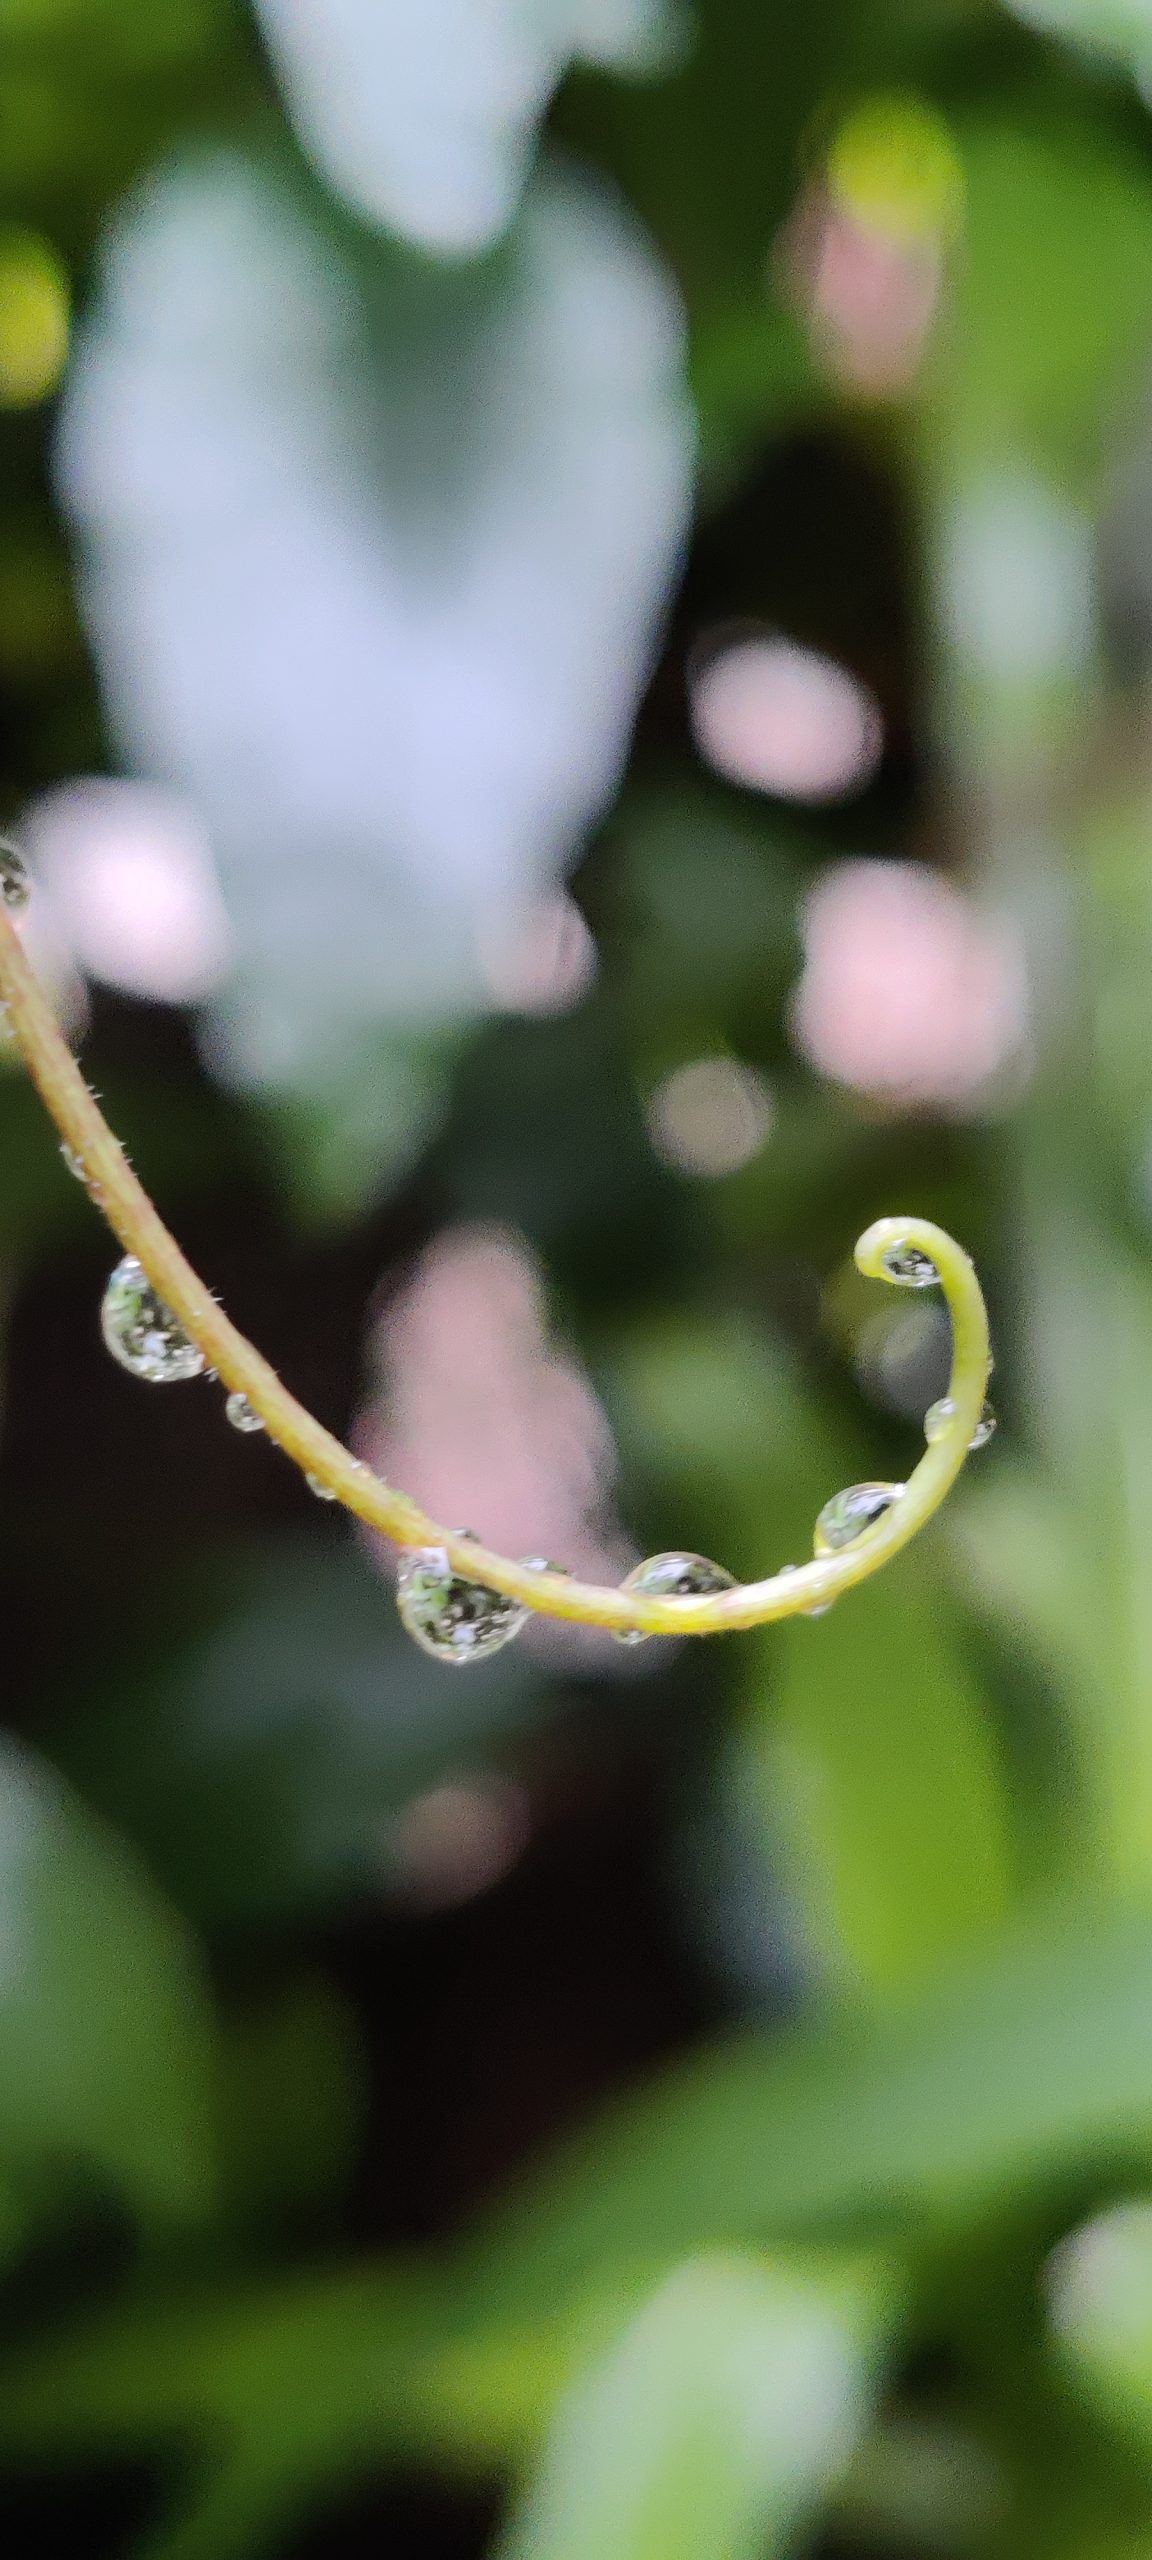 water drop on stem